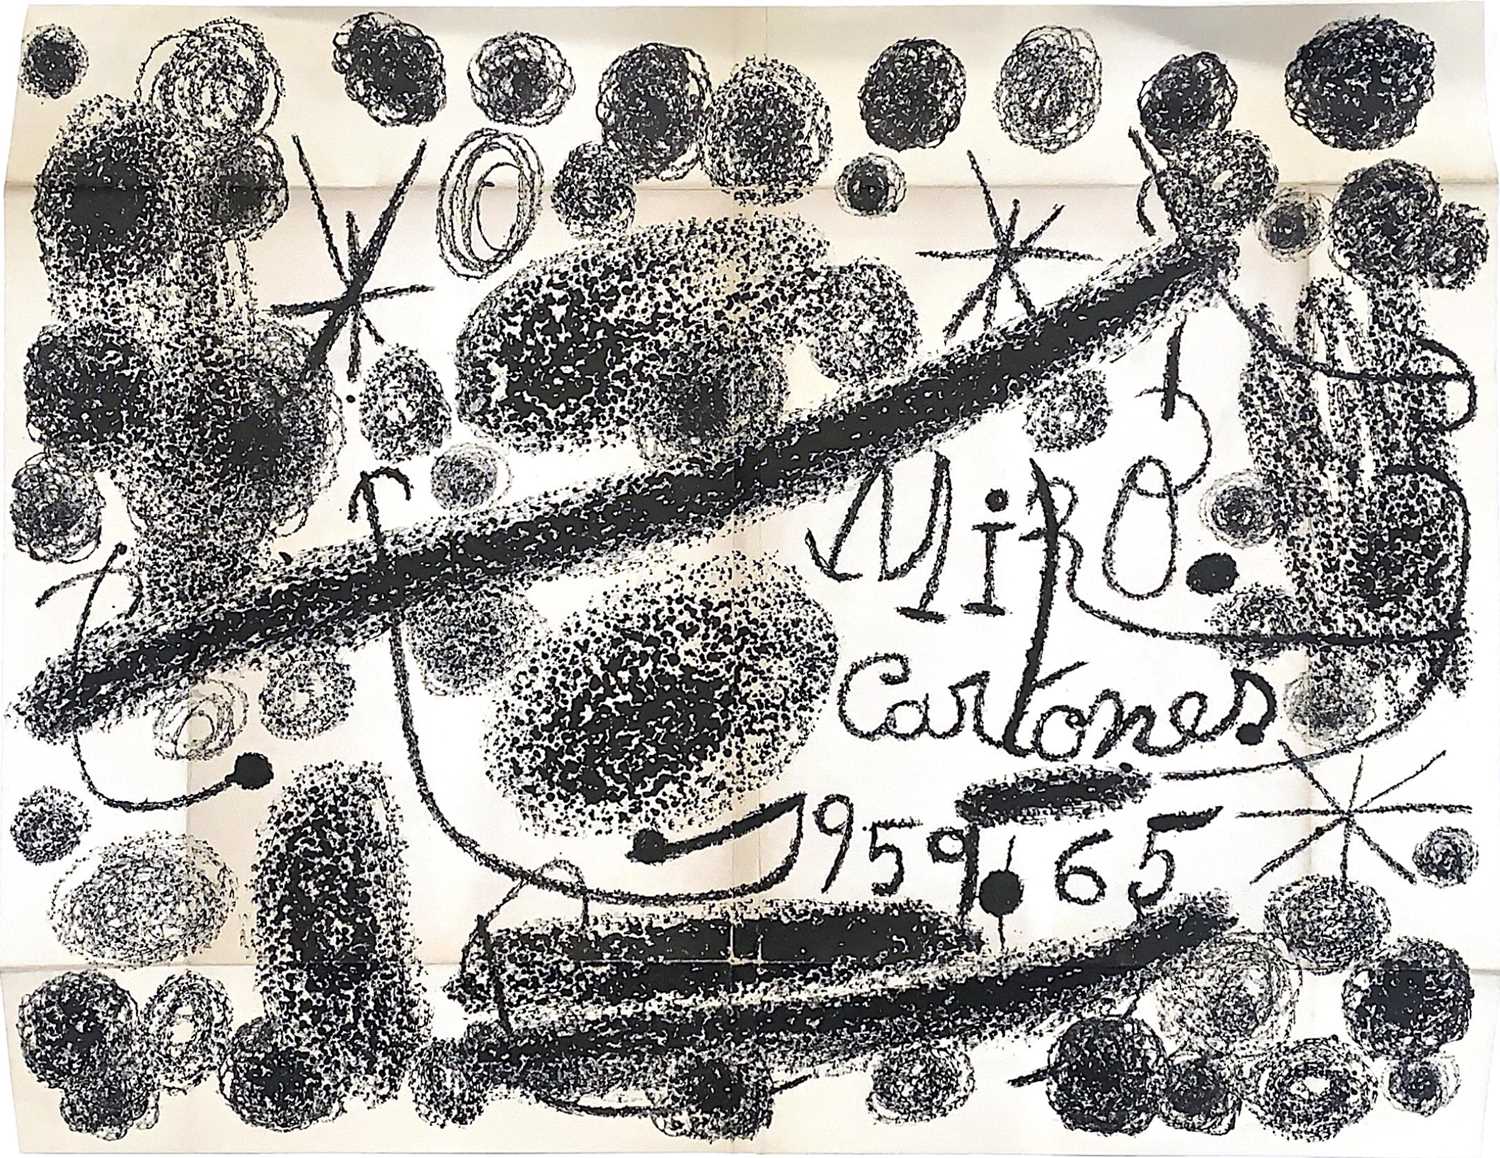 Lot 100 - CARTONES 1959-1965, A LITHOGRAPH BY JOAN MIRO